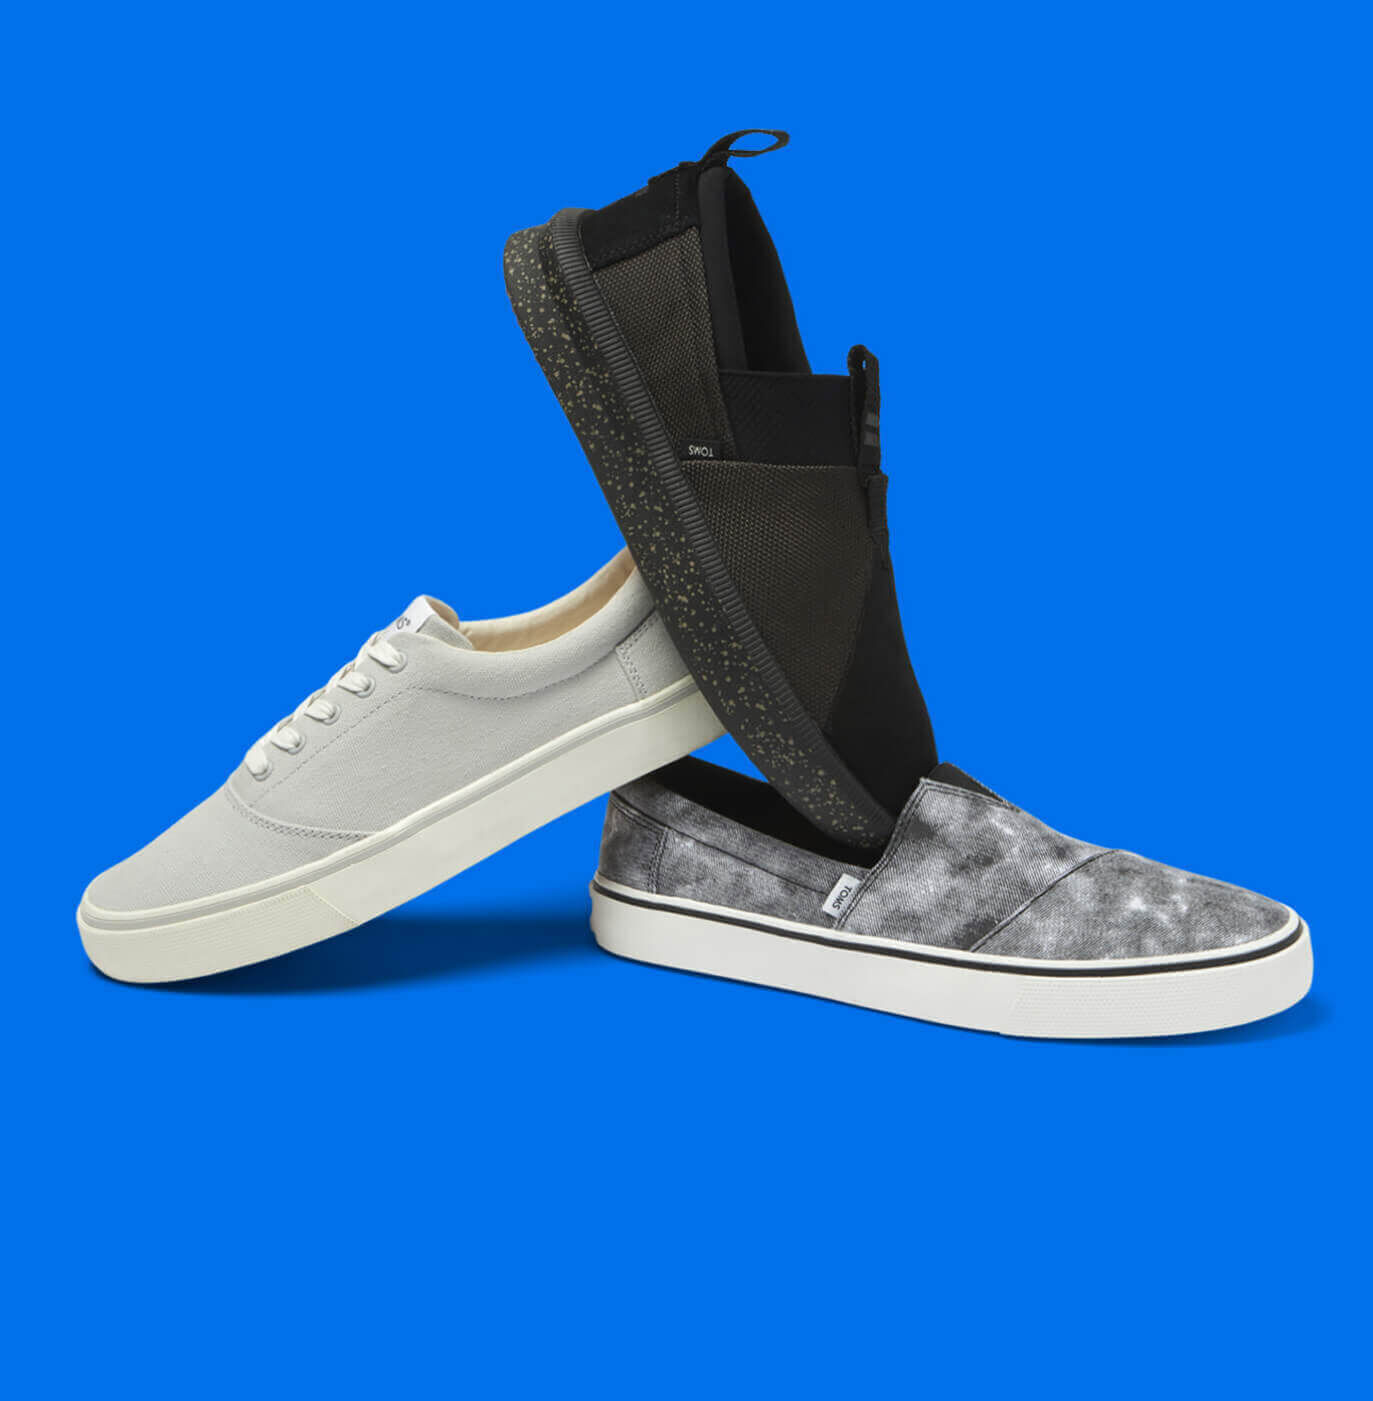 The Men's Black Slip On Repreve Fenix, the Men's Lunar Grey Alpargata Fenix Sneaker Shoe, and the Water Resistant Black Alpargata Rover shown.